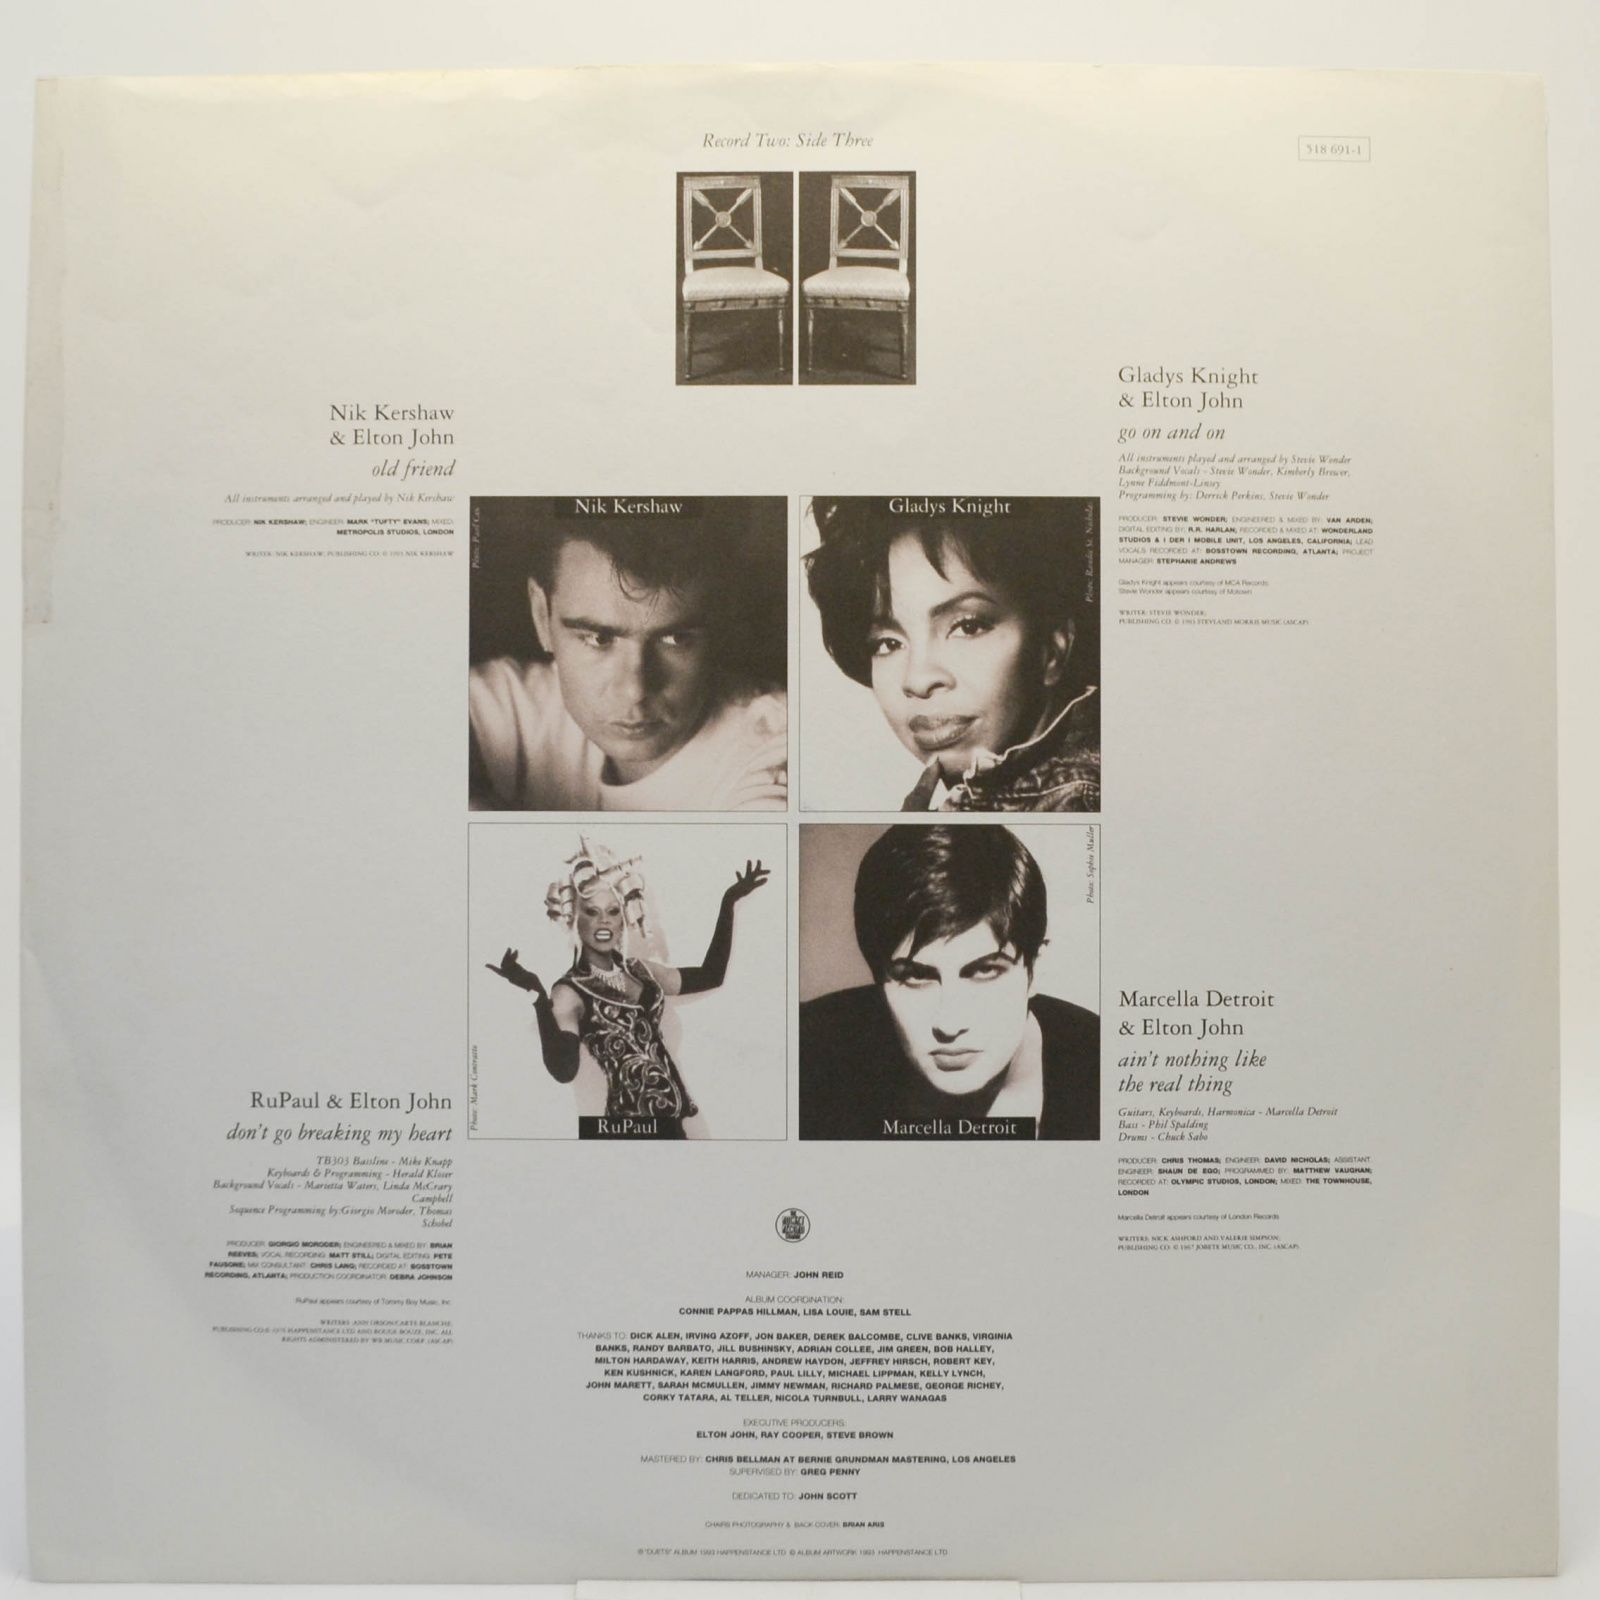 Elton John — Duets (2LP), 1993